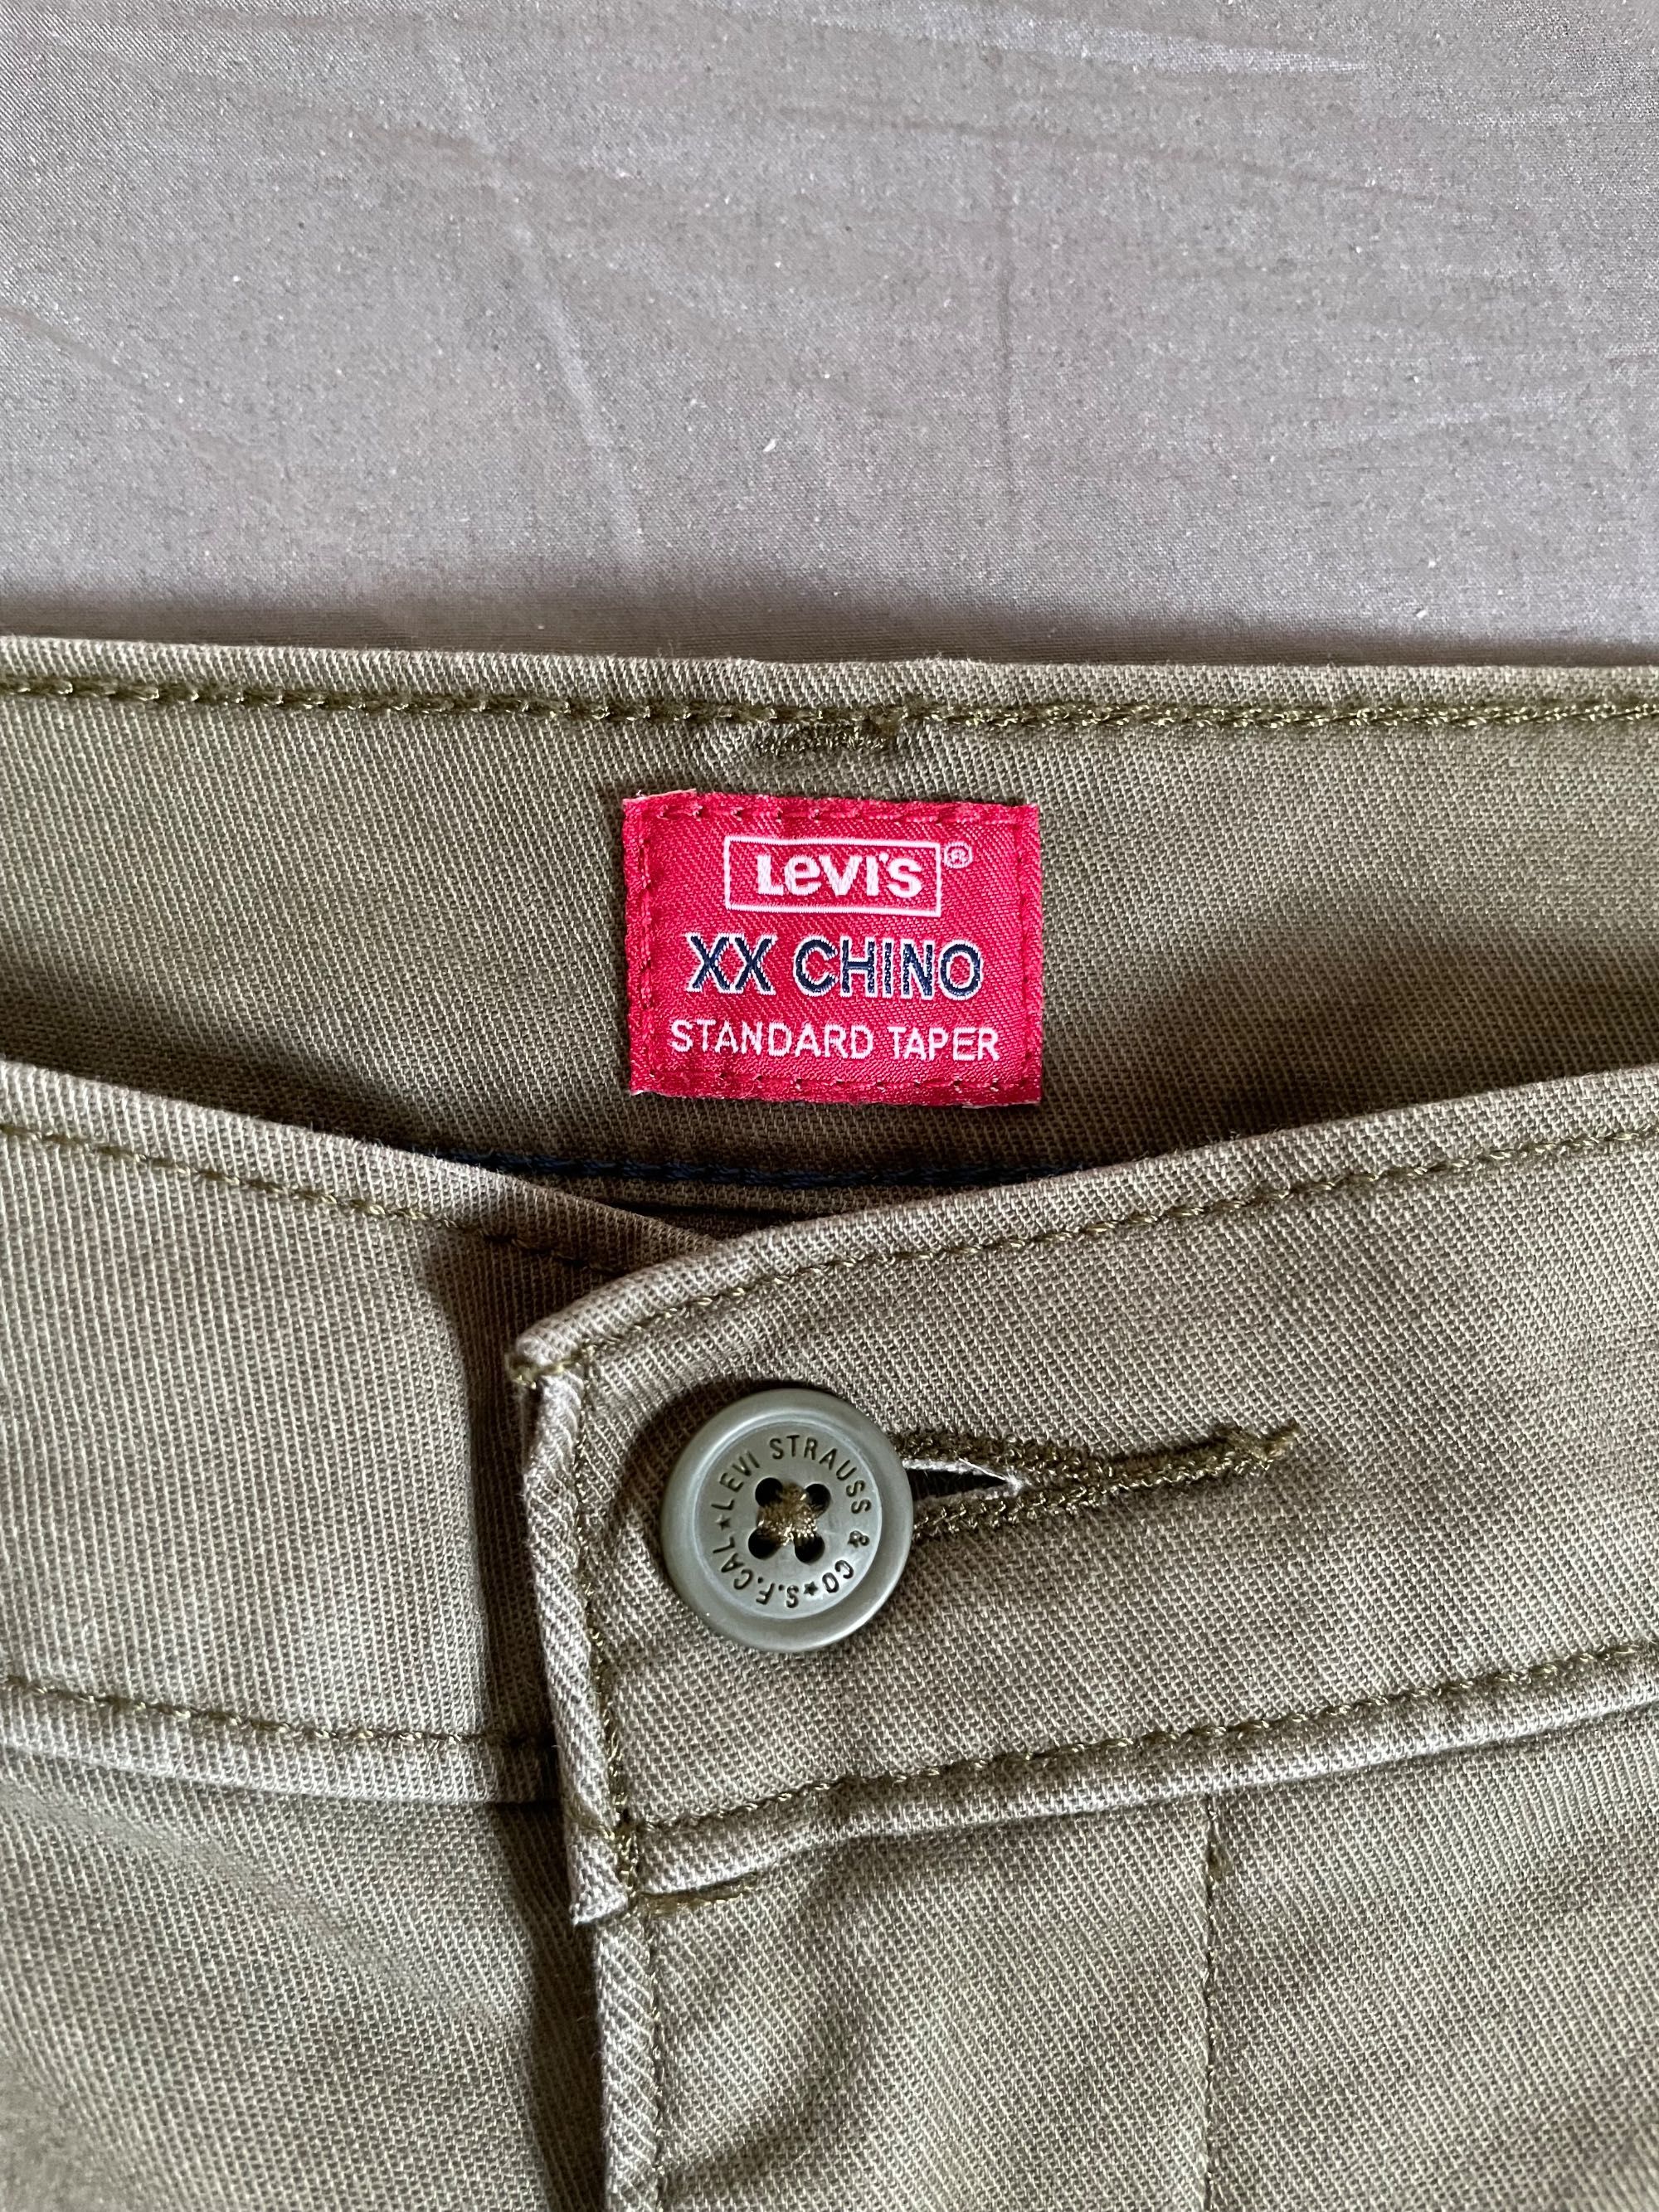 Levi's Chinosy Spodnie Khaki